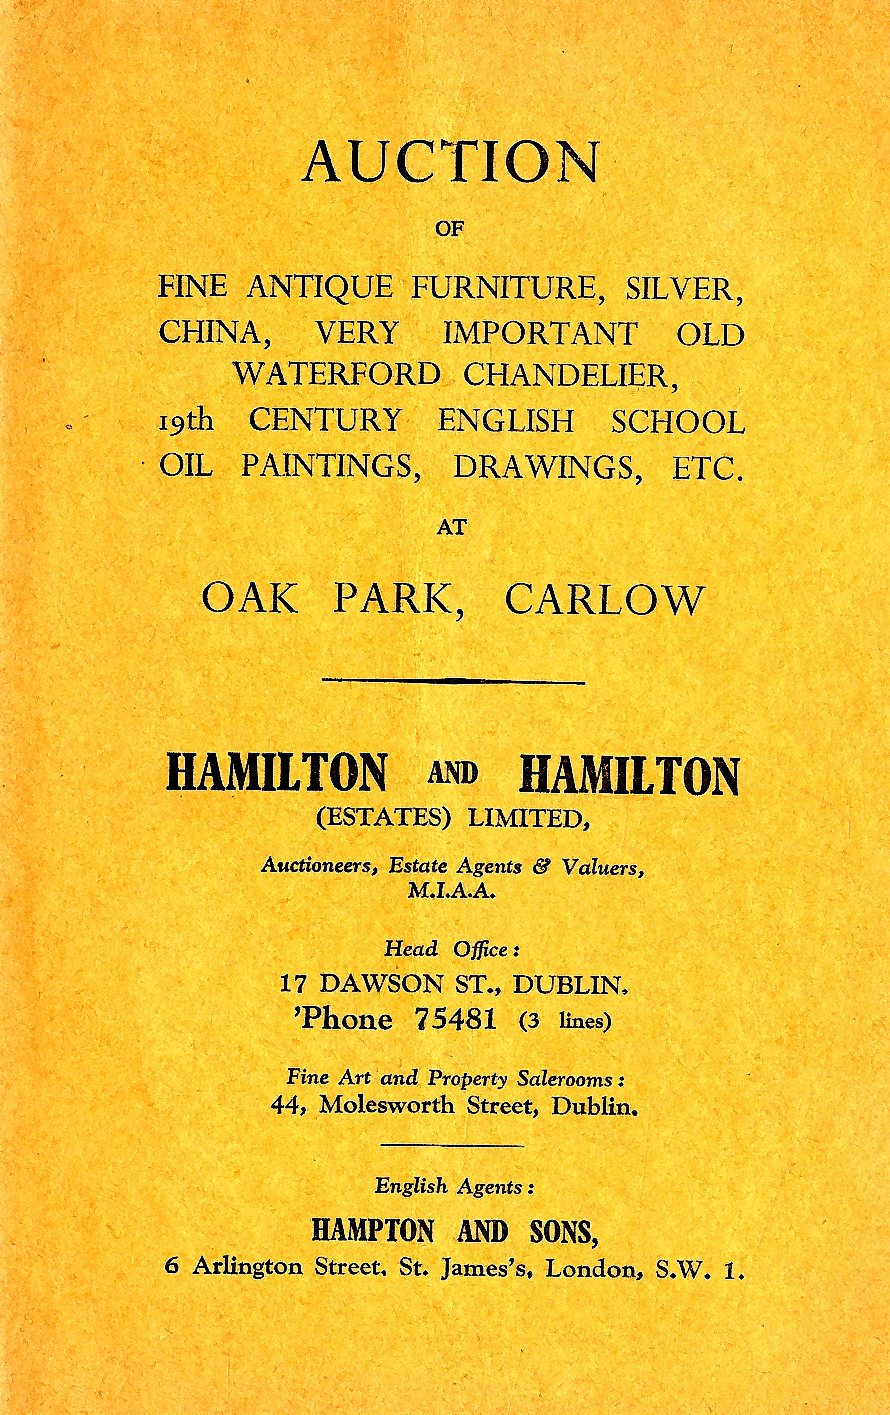 Co. Carlow: House Sale Catalogue: Oak Pa